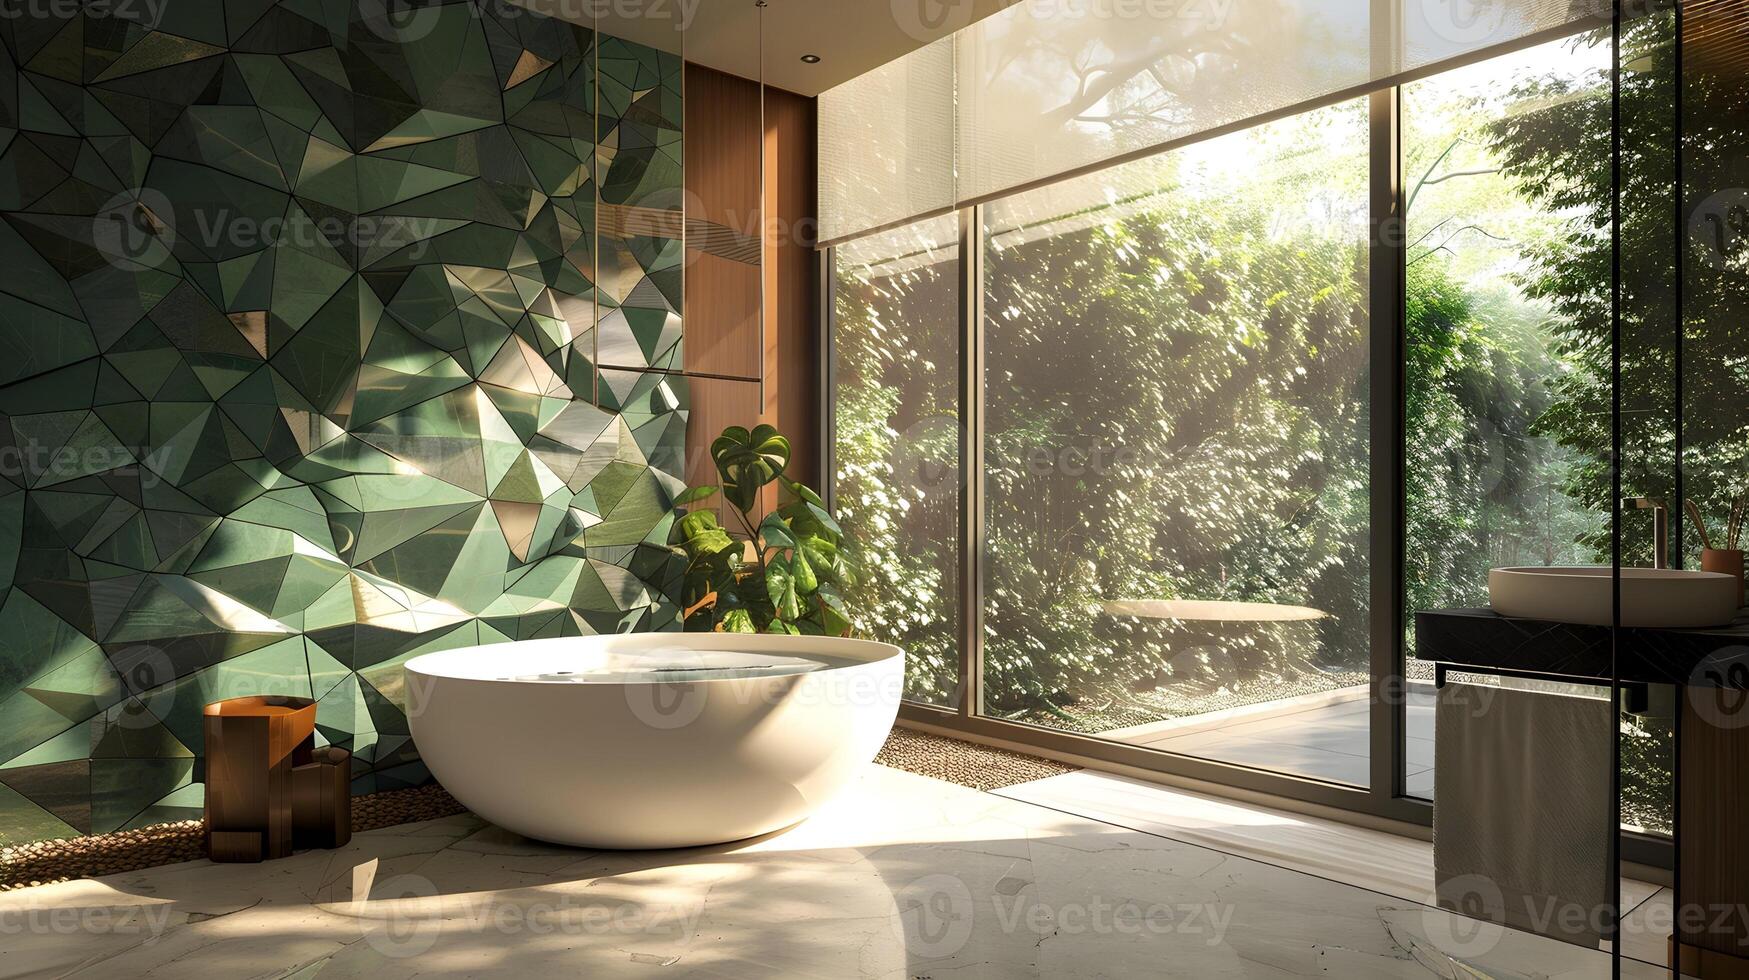 Serene Bathroom Retreat with Green Geometric Tiles and Freestanding Tub Amidst Lush Gardens photo